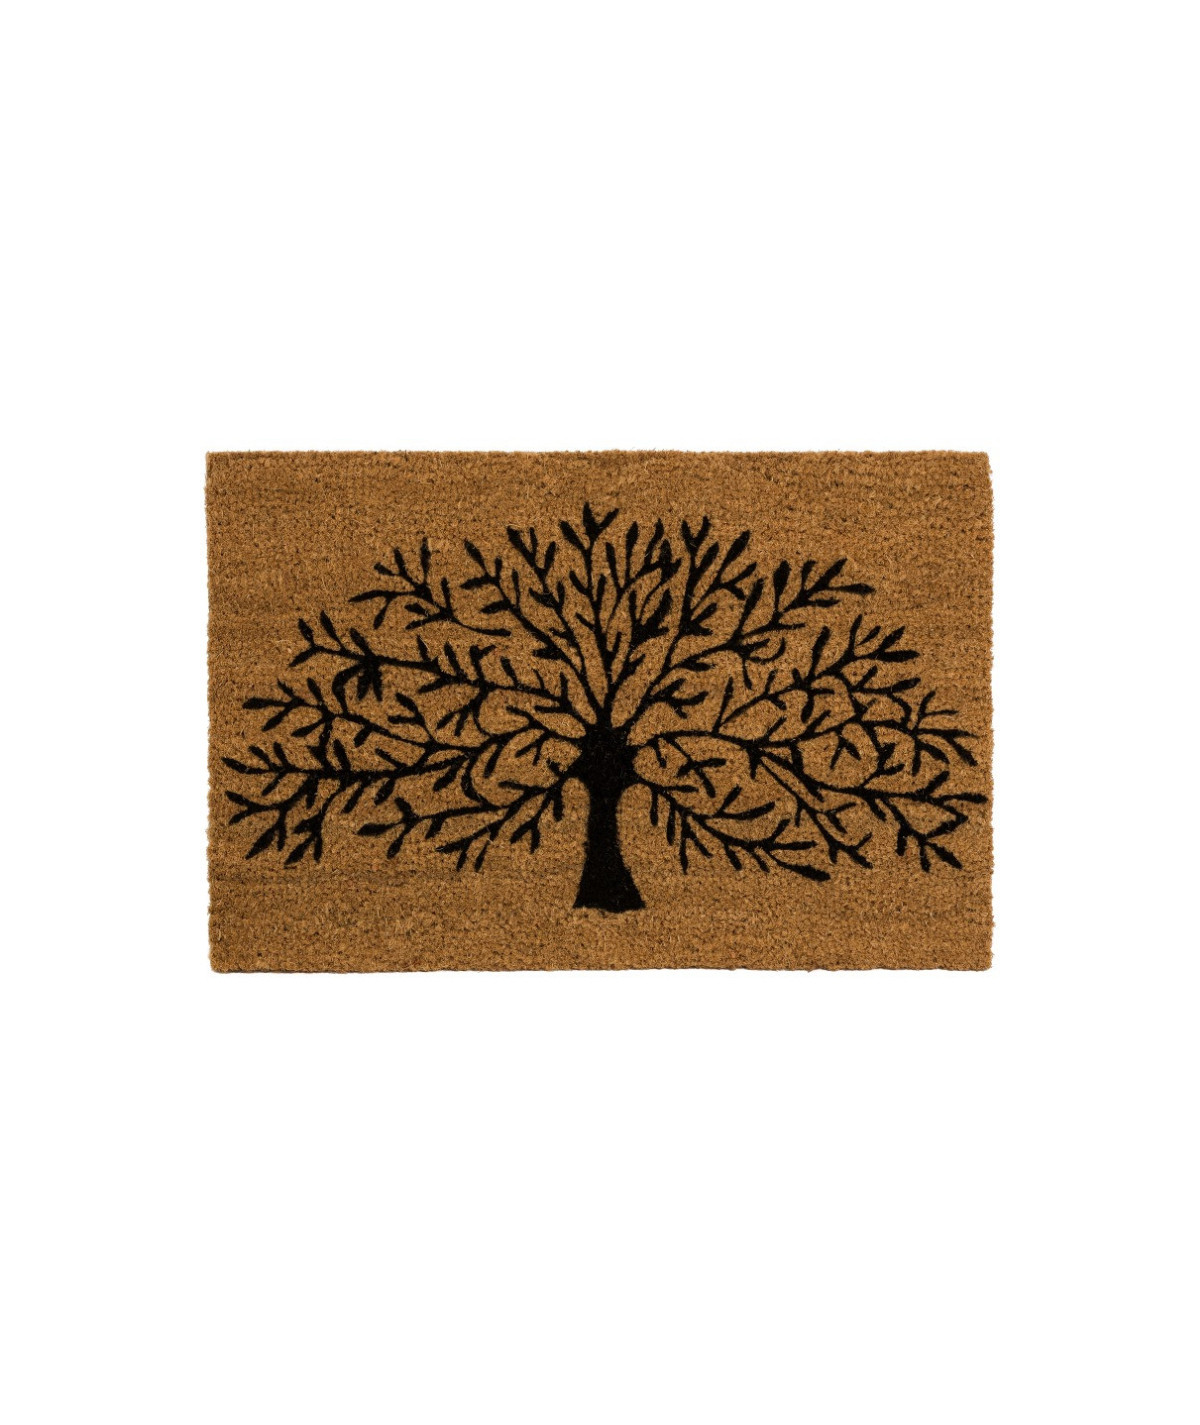 Paillasson en coco motif arbre de vie 60x40cm - Arborvitae |YESDEKO